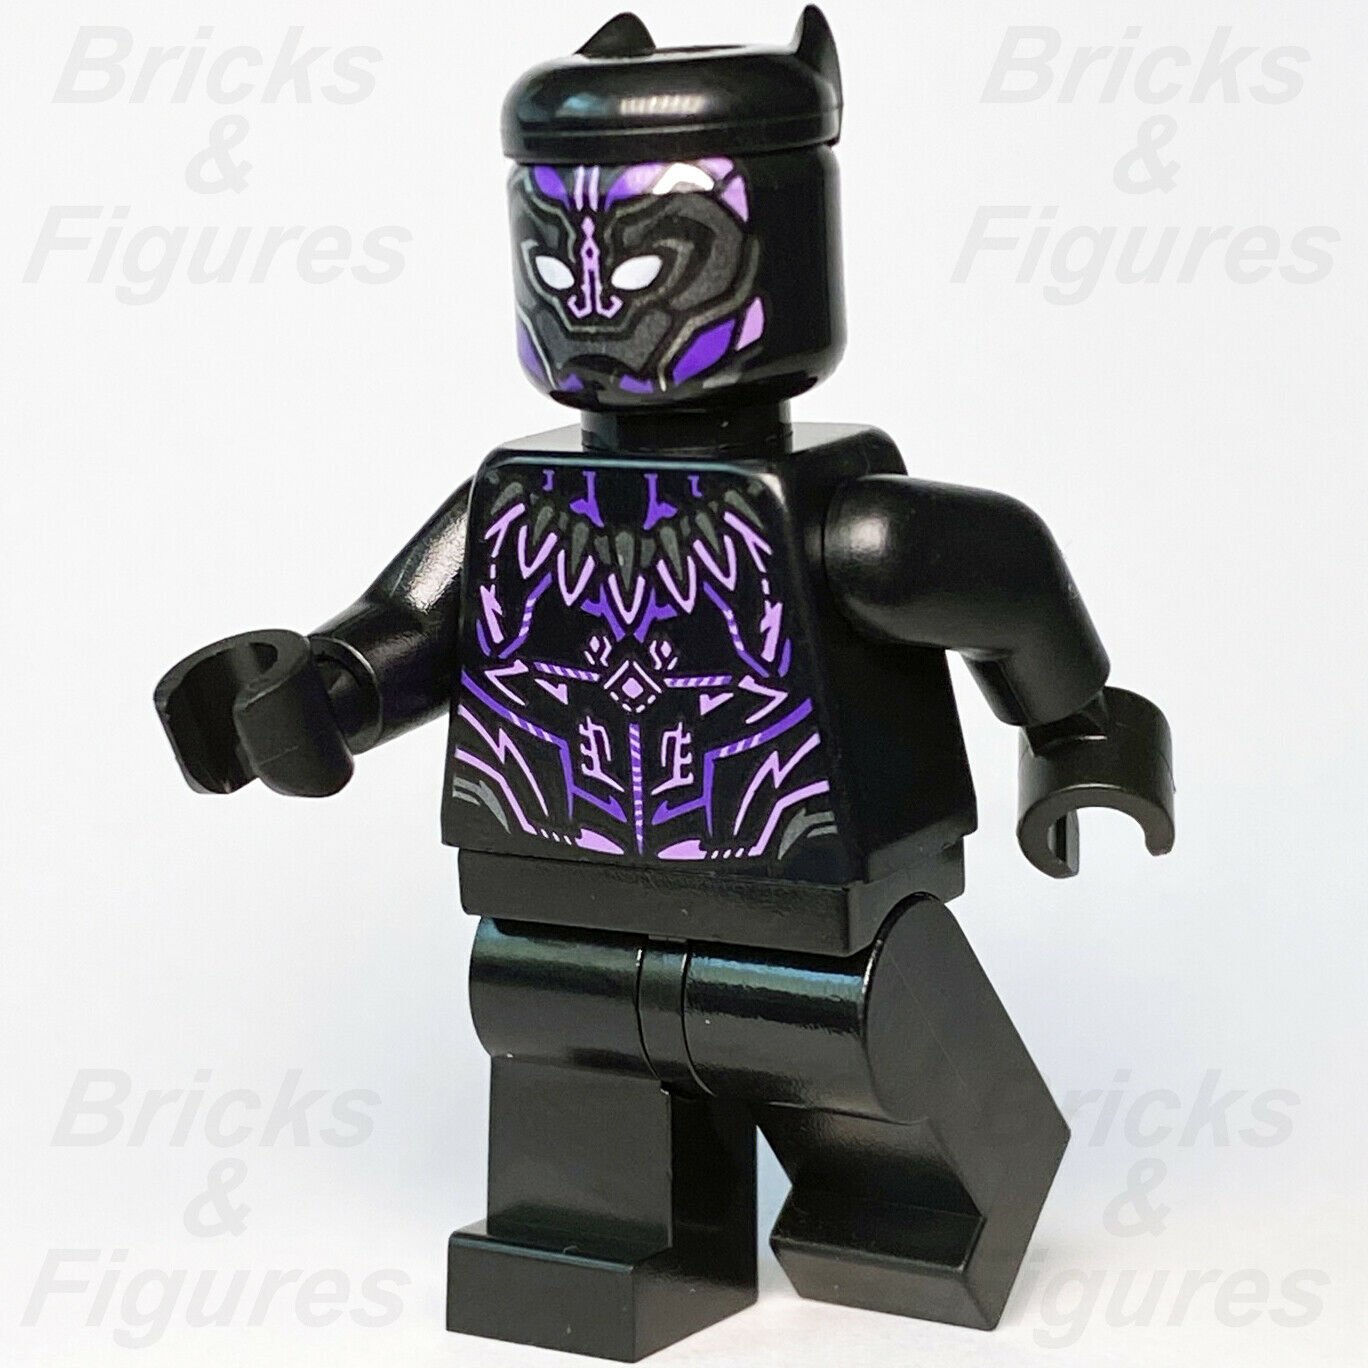 Marvel Super Heroes LEGO Black Panther Avengers Endgame Minifigure 76186 sh728 - Bricks & Figures